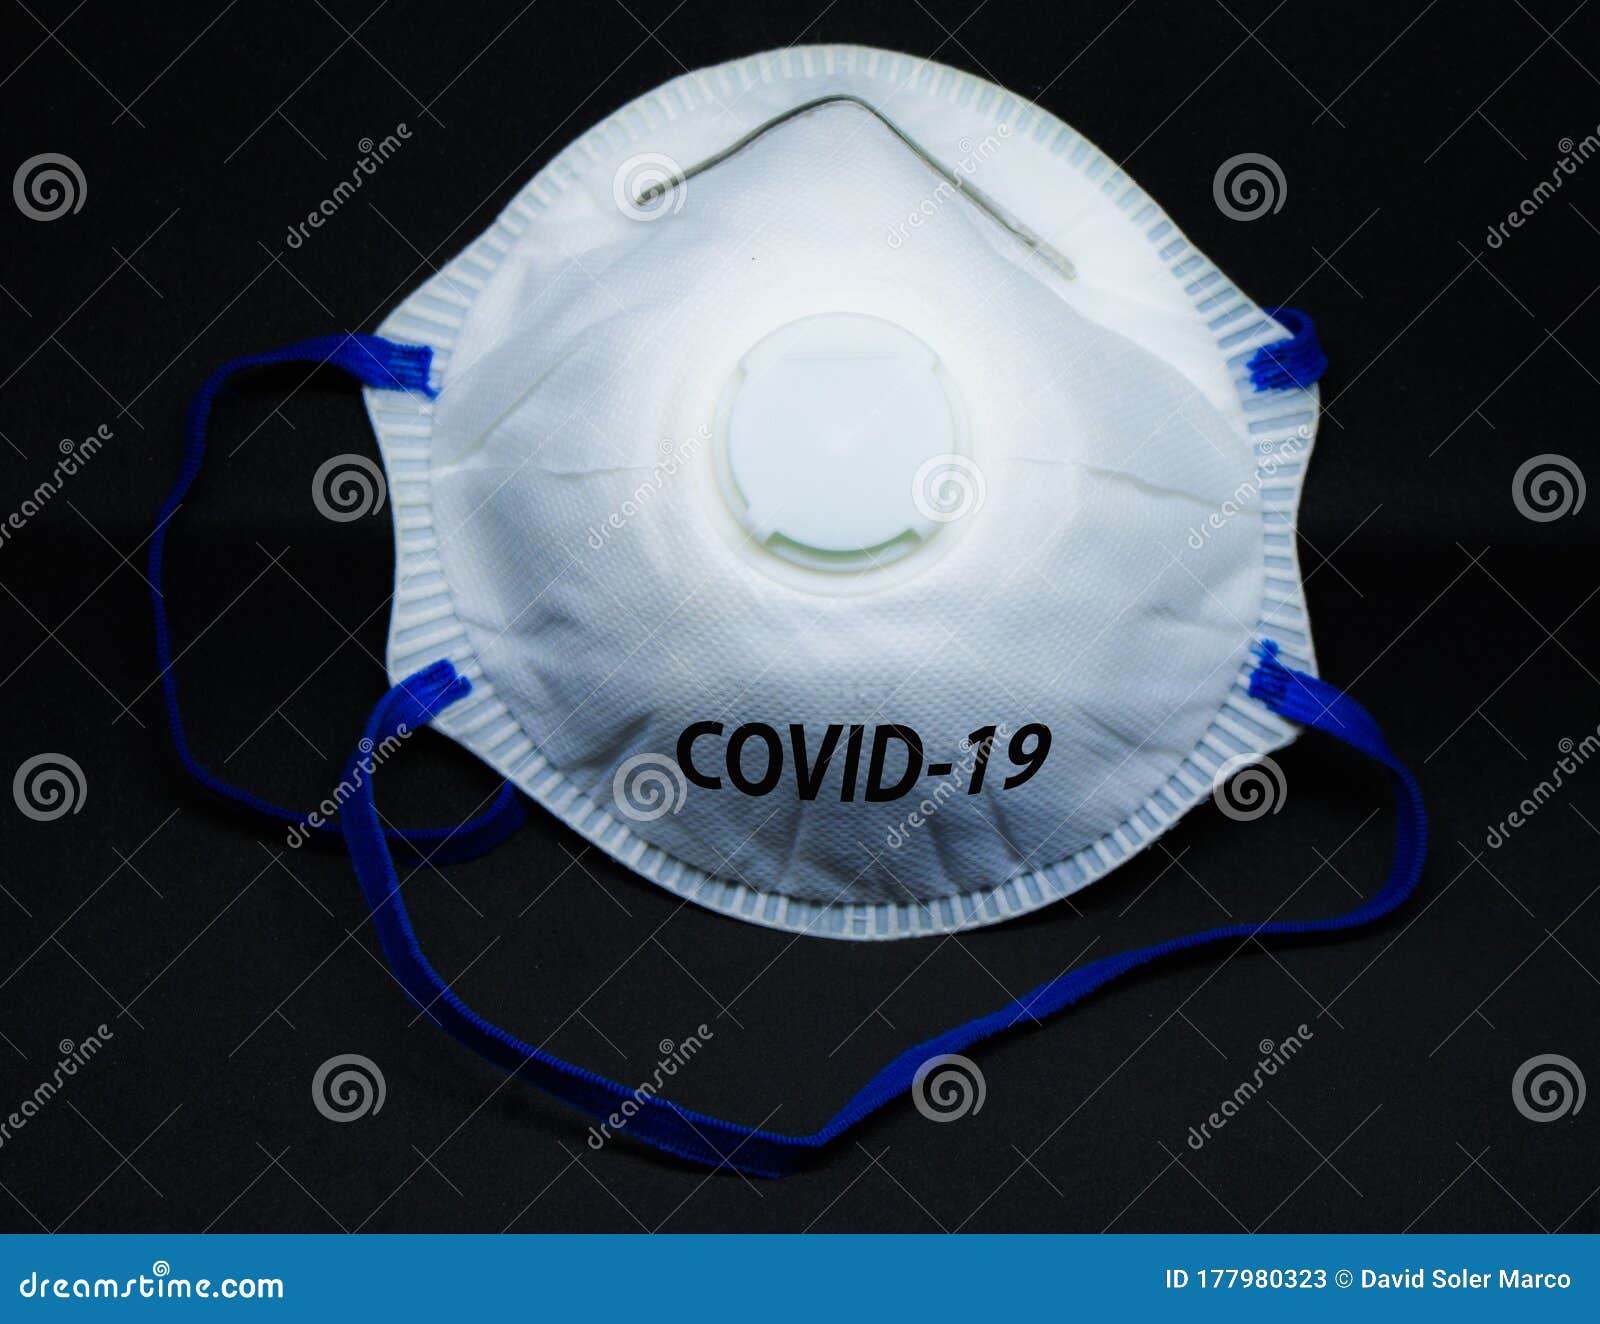 face mask coronavirus covid-19 protective white maskblack background air filter